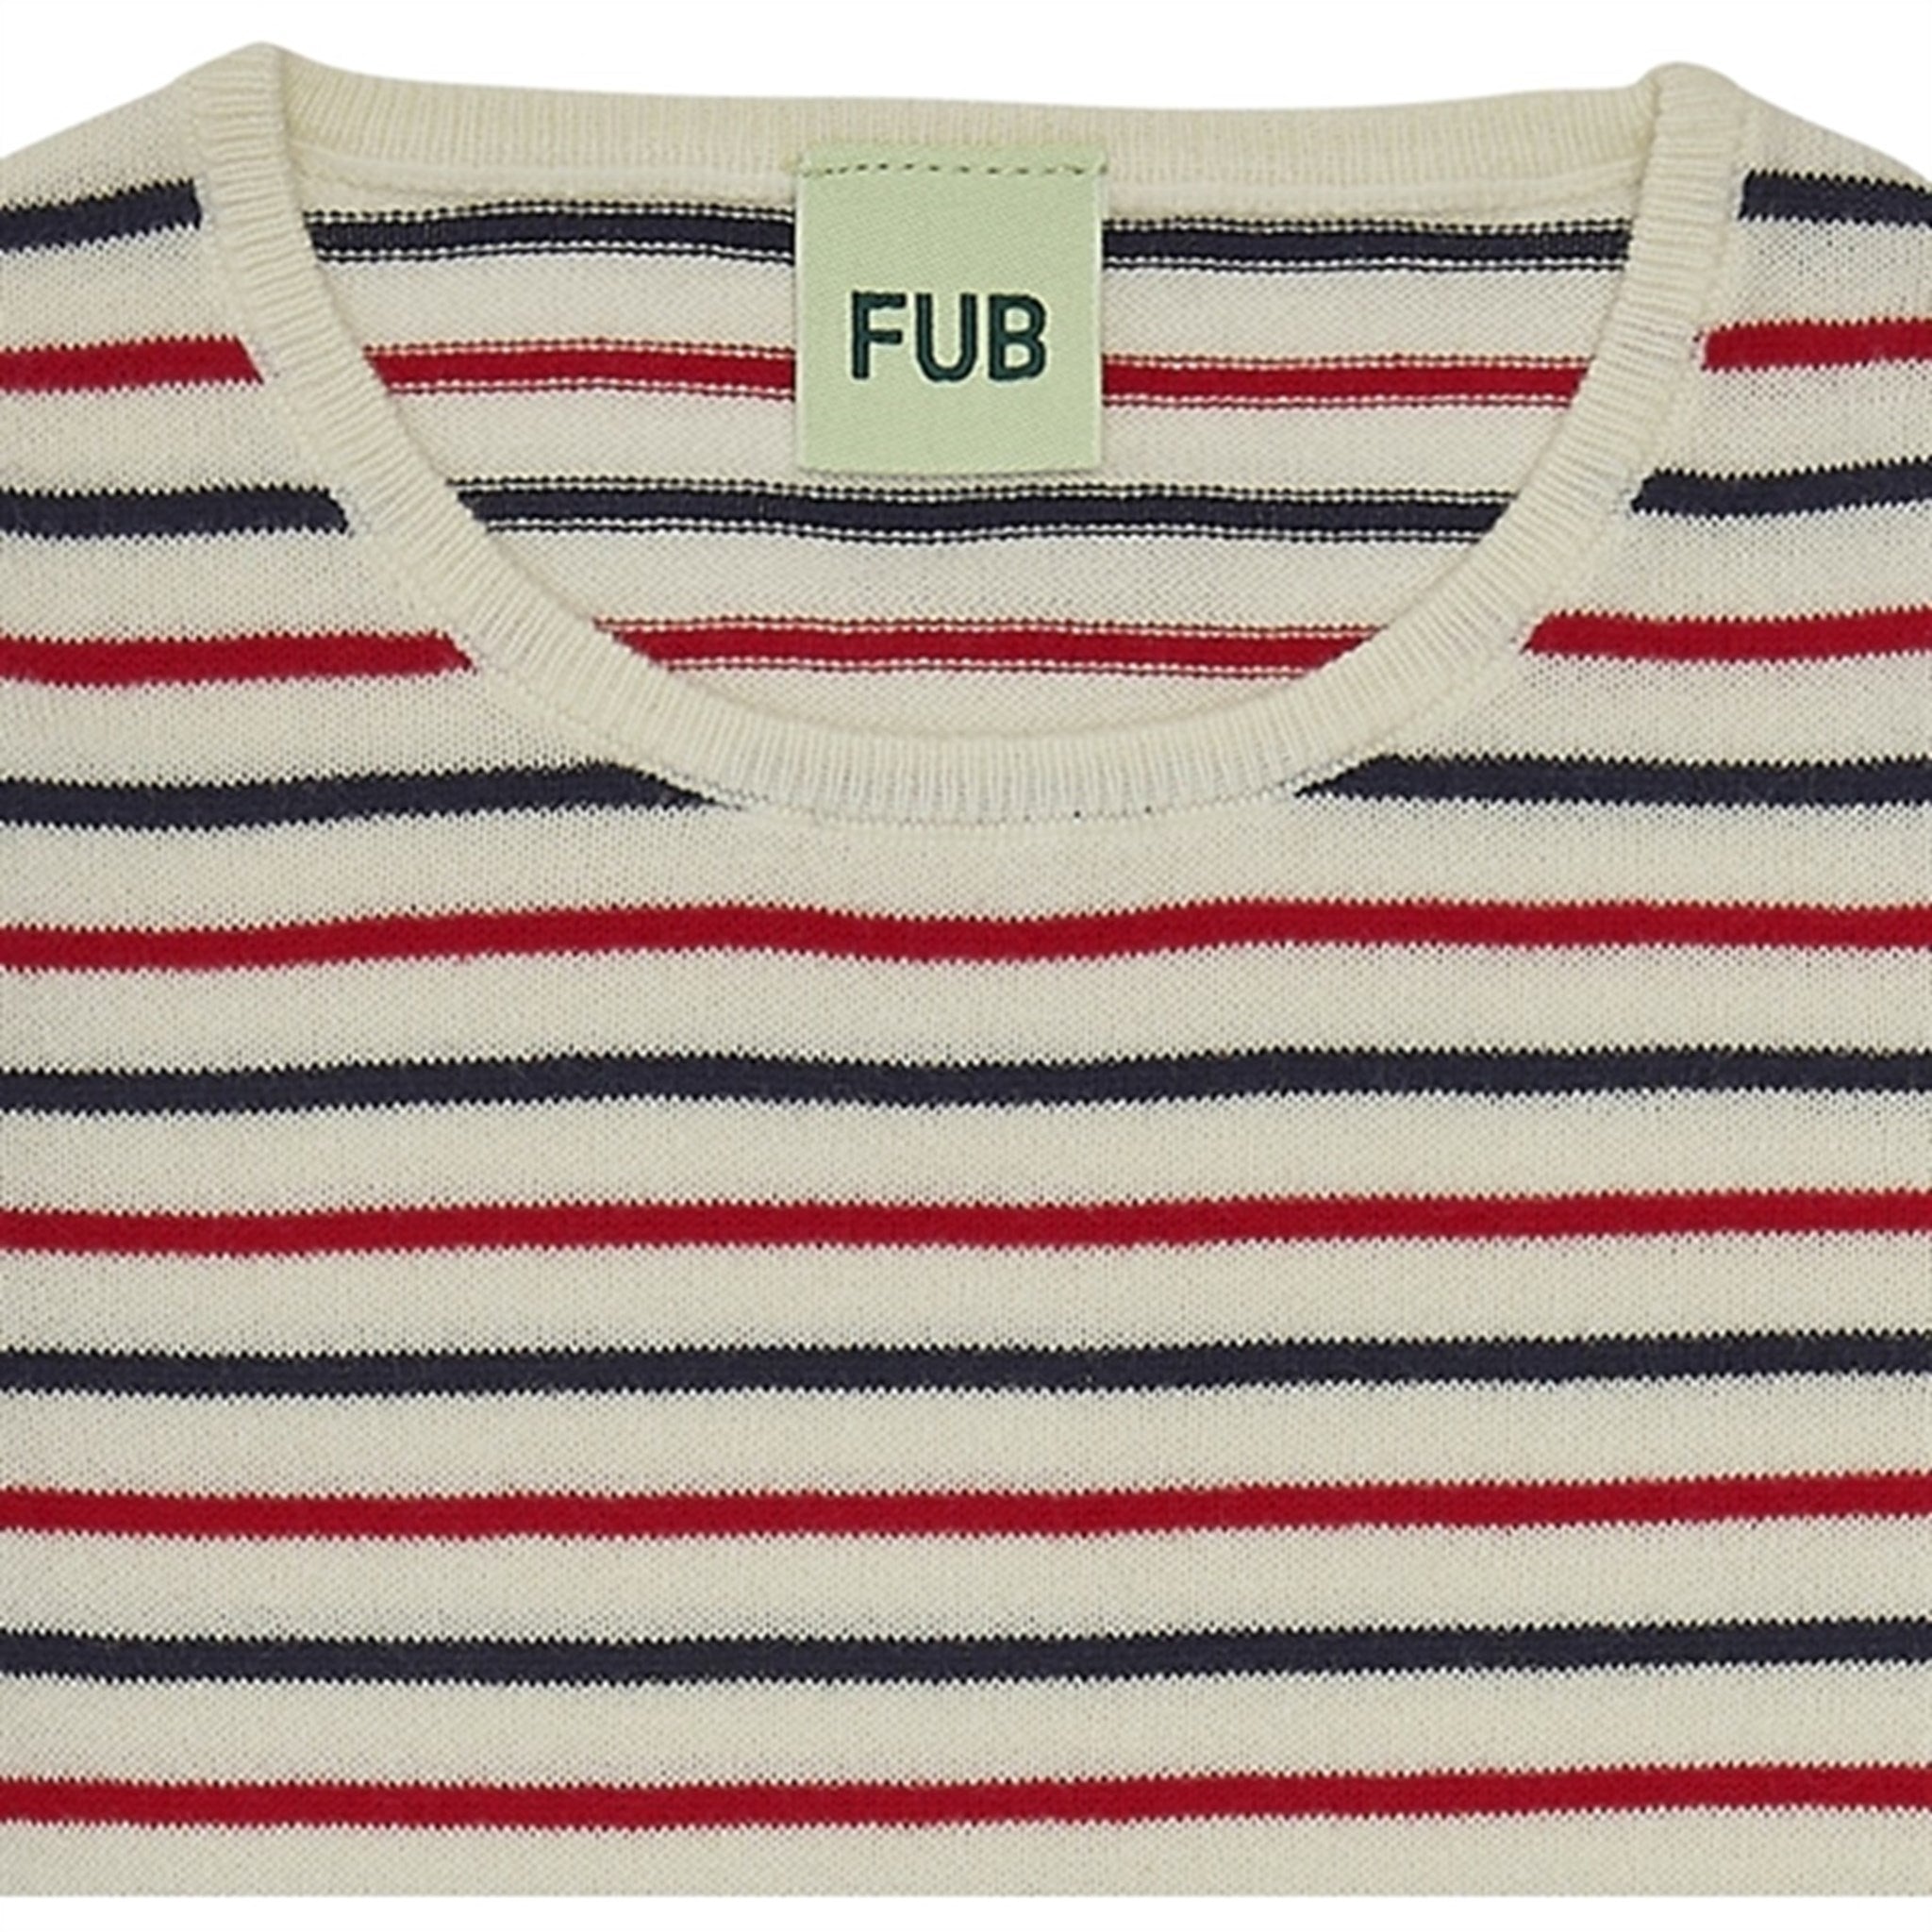 FUB Contrast Striped Blouse Ecru/Dark Navy/Bright Red 2